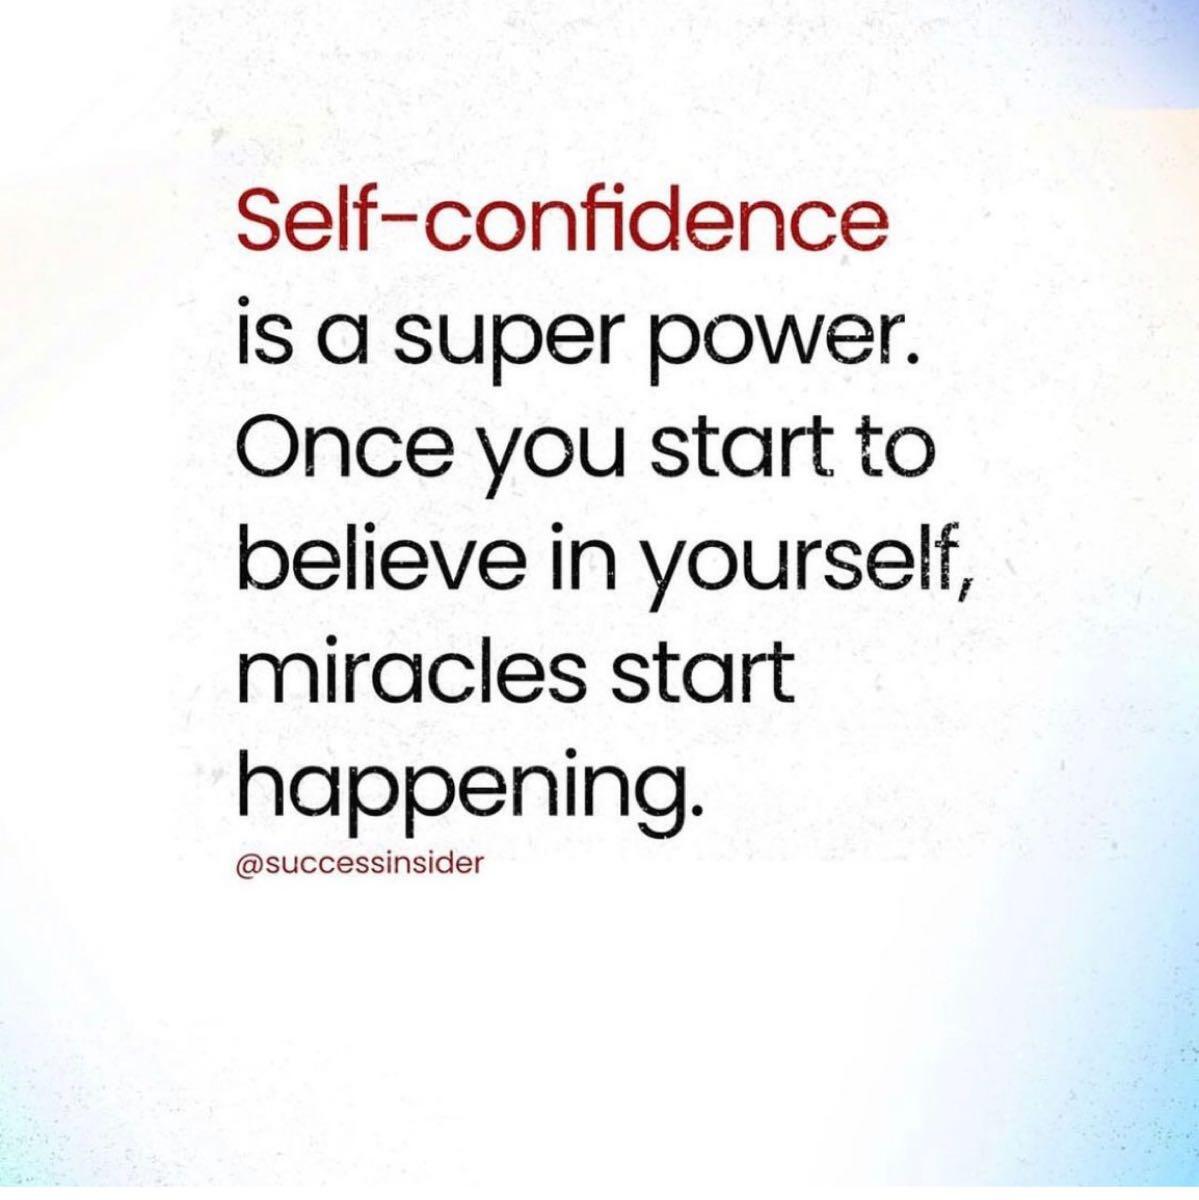 Zentoa - Confidence is your superpower. Believe in